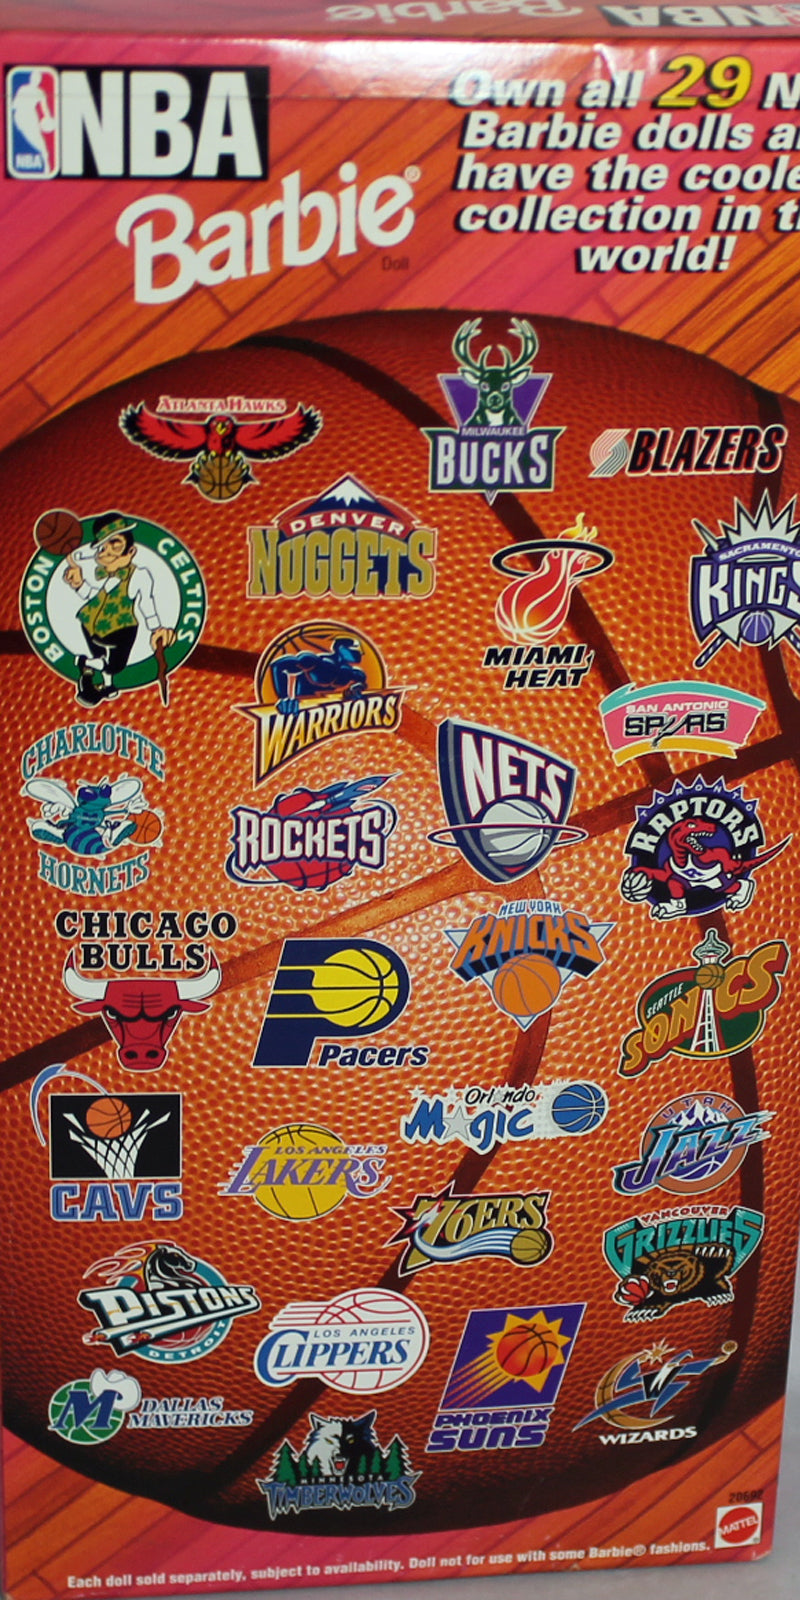 1998 NBA Chicago Bulls Barbie (20692)